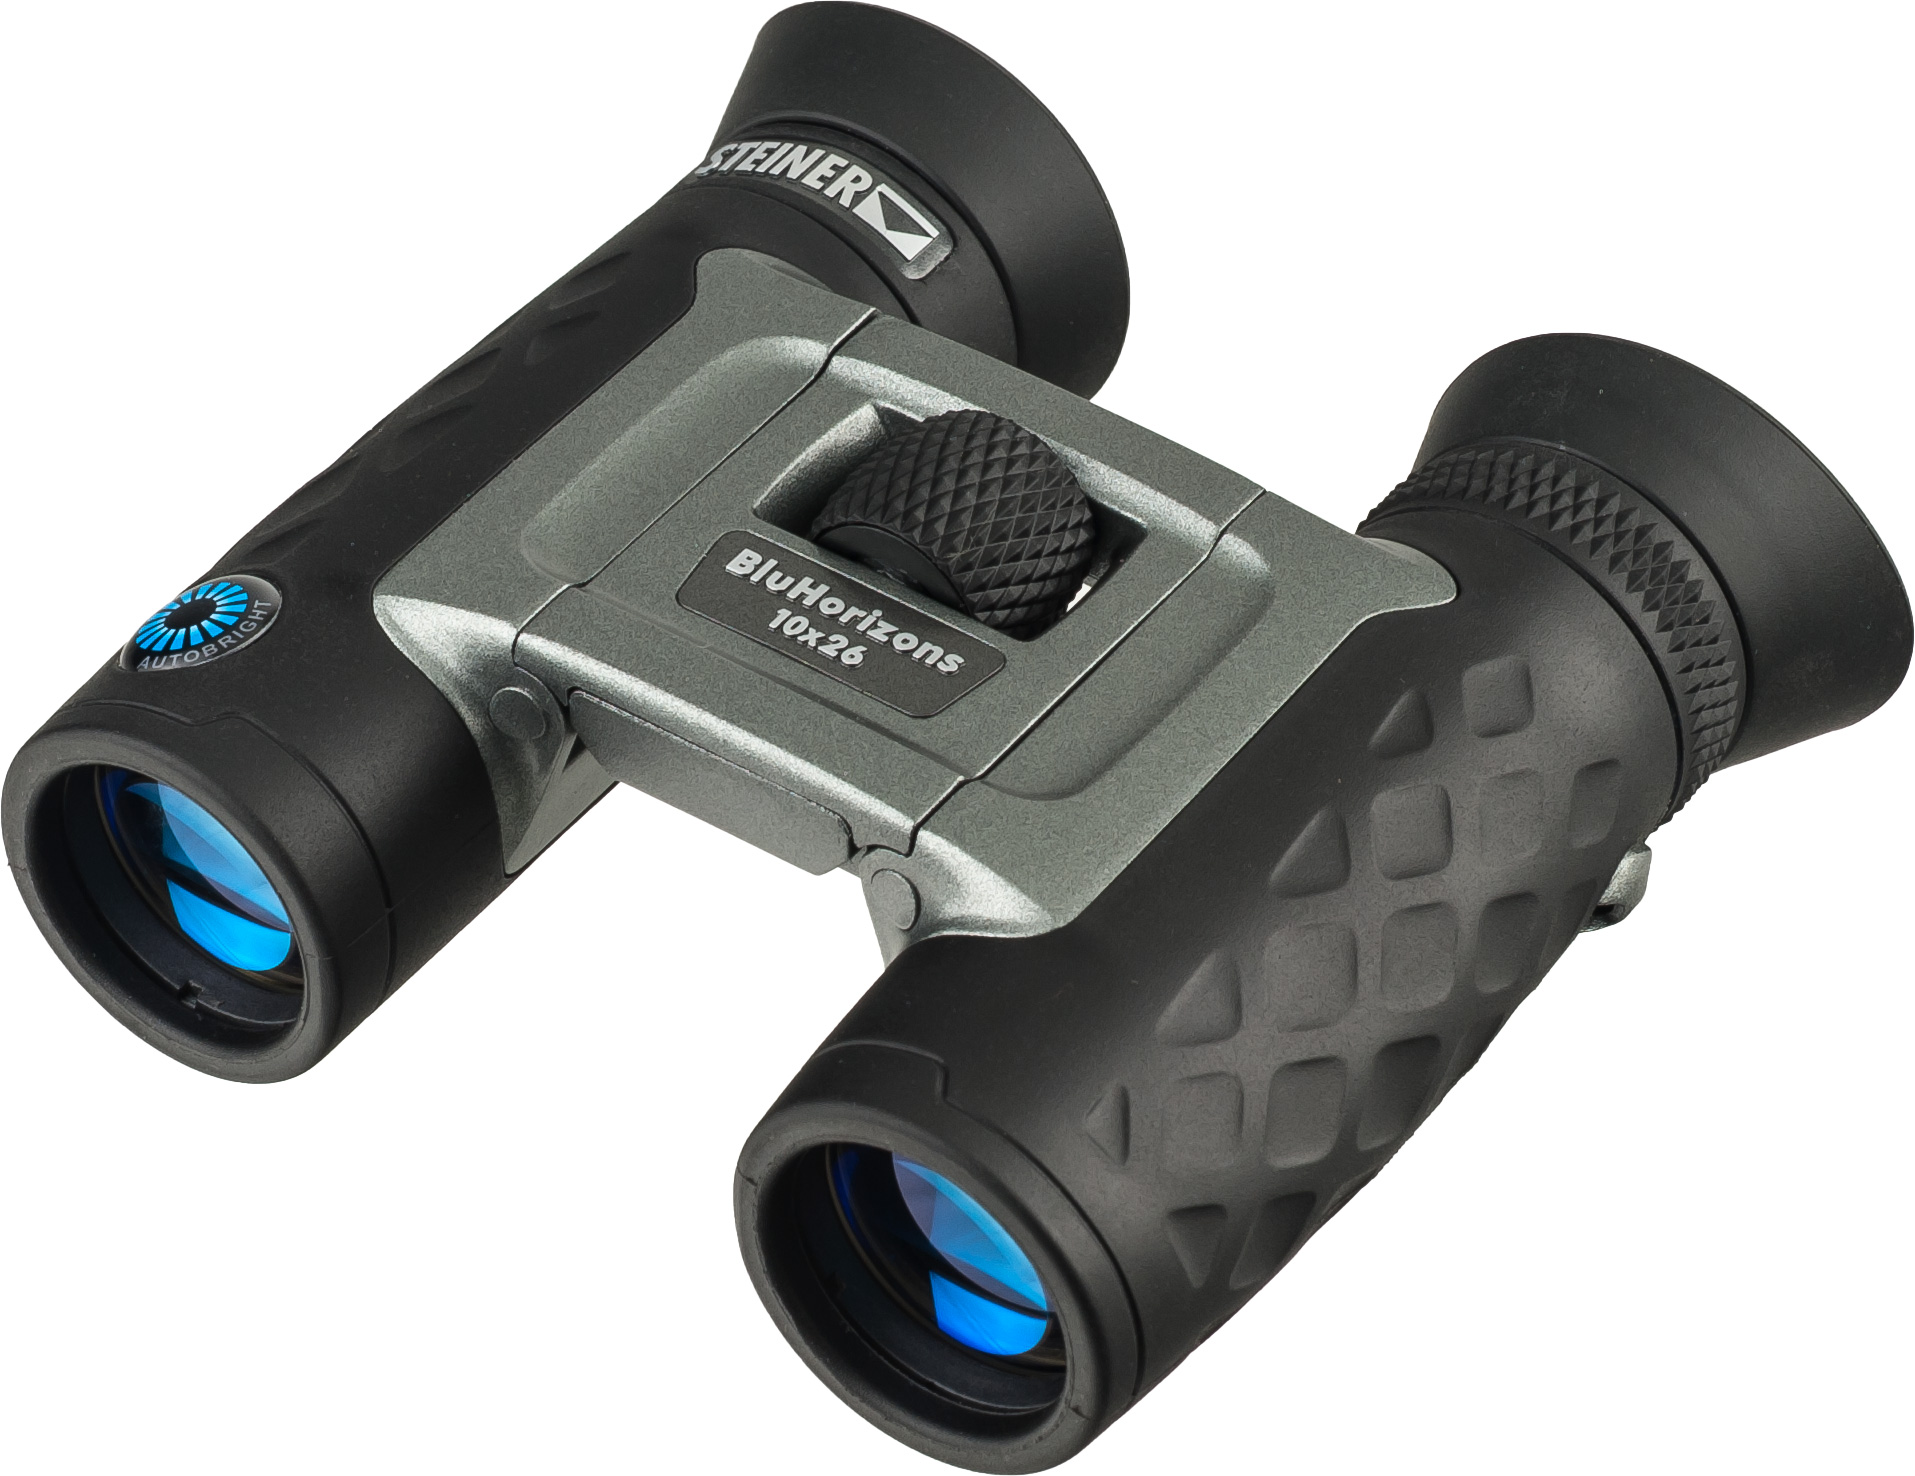 Steiner BluHorizons 10x26mm Roof Prism Binoculars